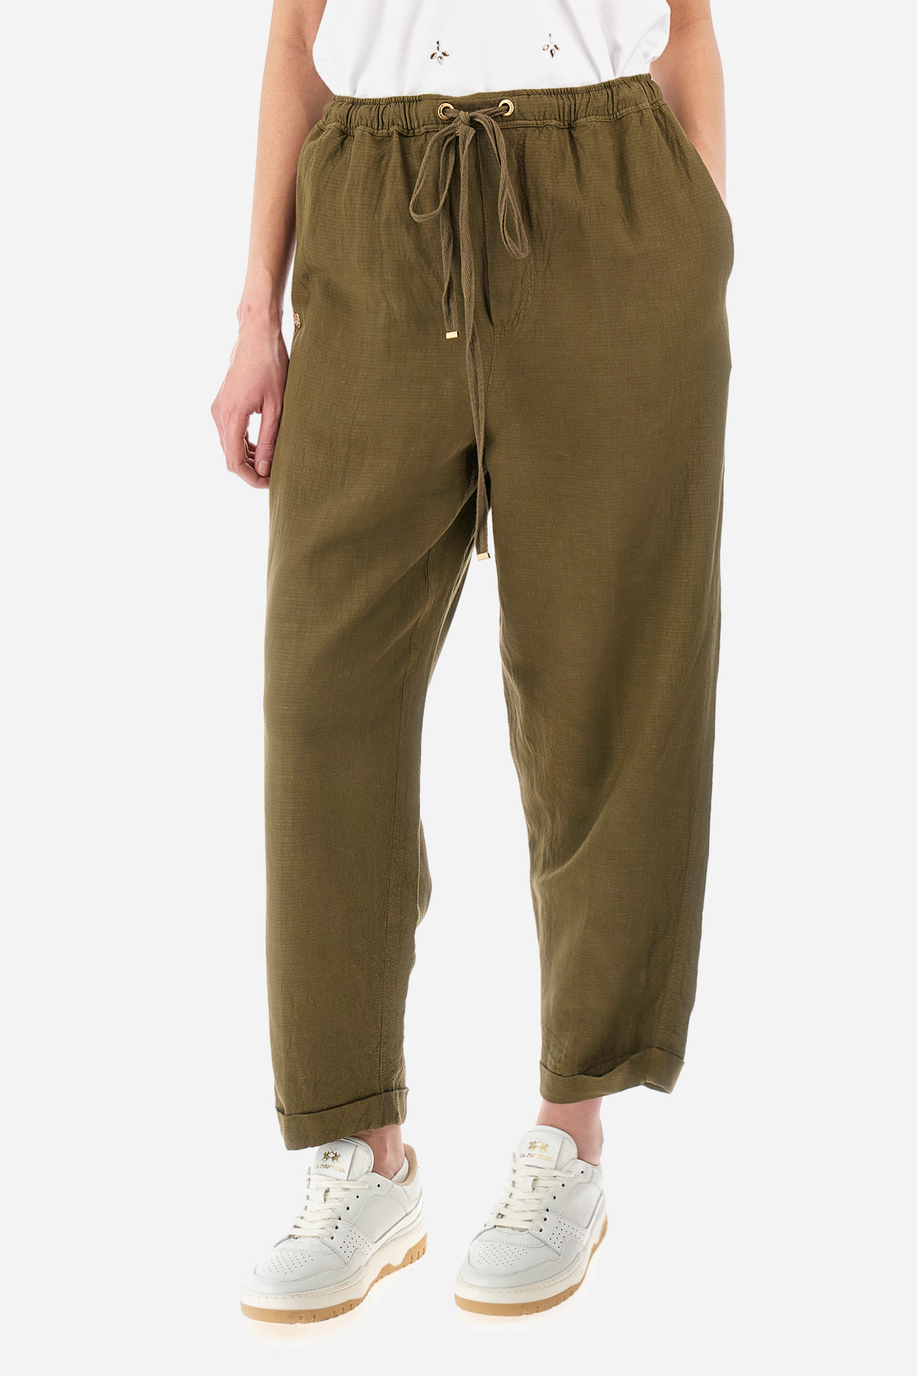 Regular-fit trousers in a linen blend - Yelisabeta - Spring looks for her | La Martina - Official Online Shop